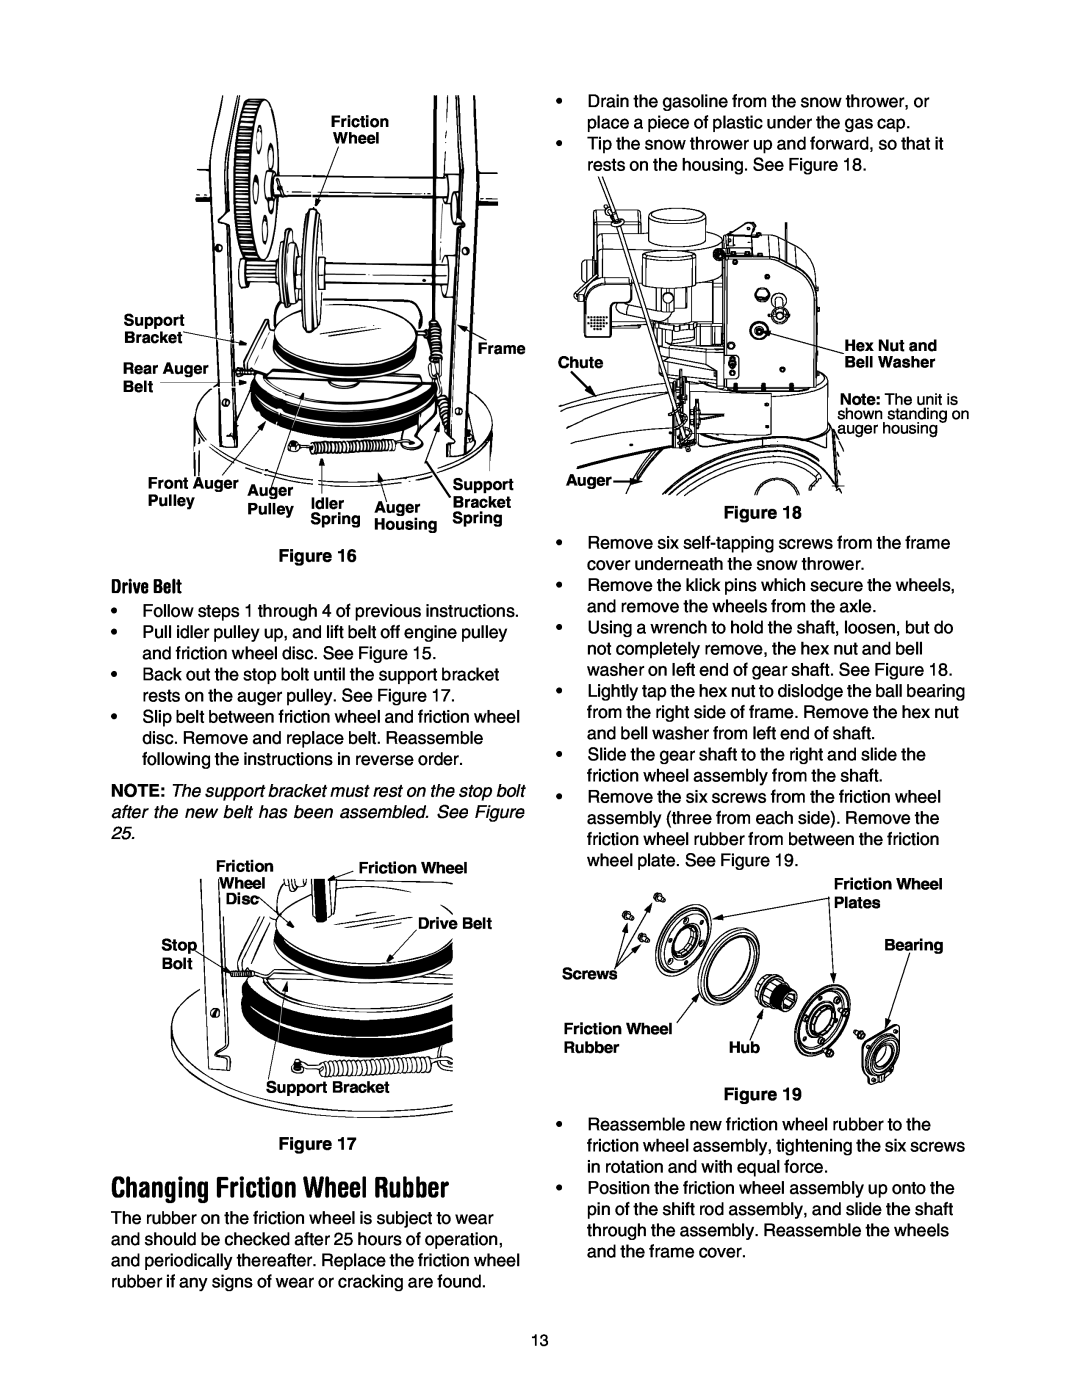 MTD 640 manual Changing Friction Wheel Rubber, Drive Belt 